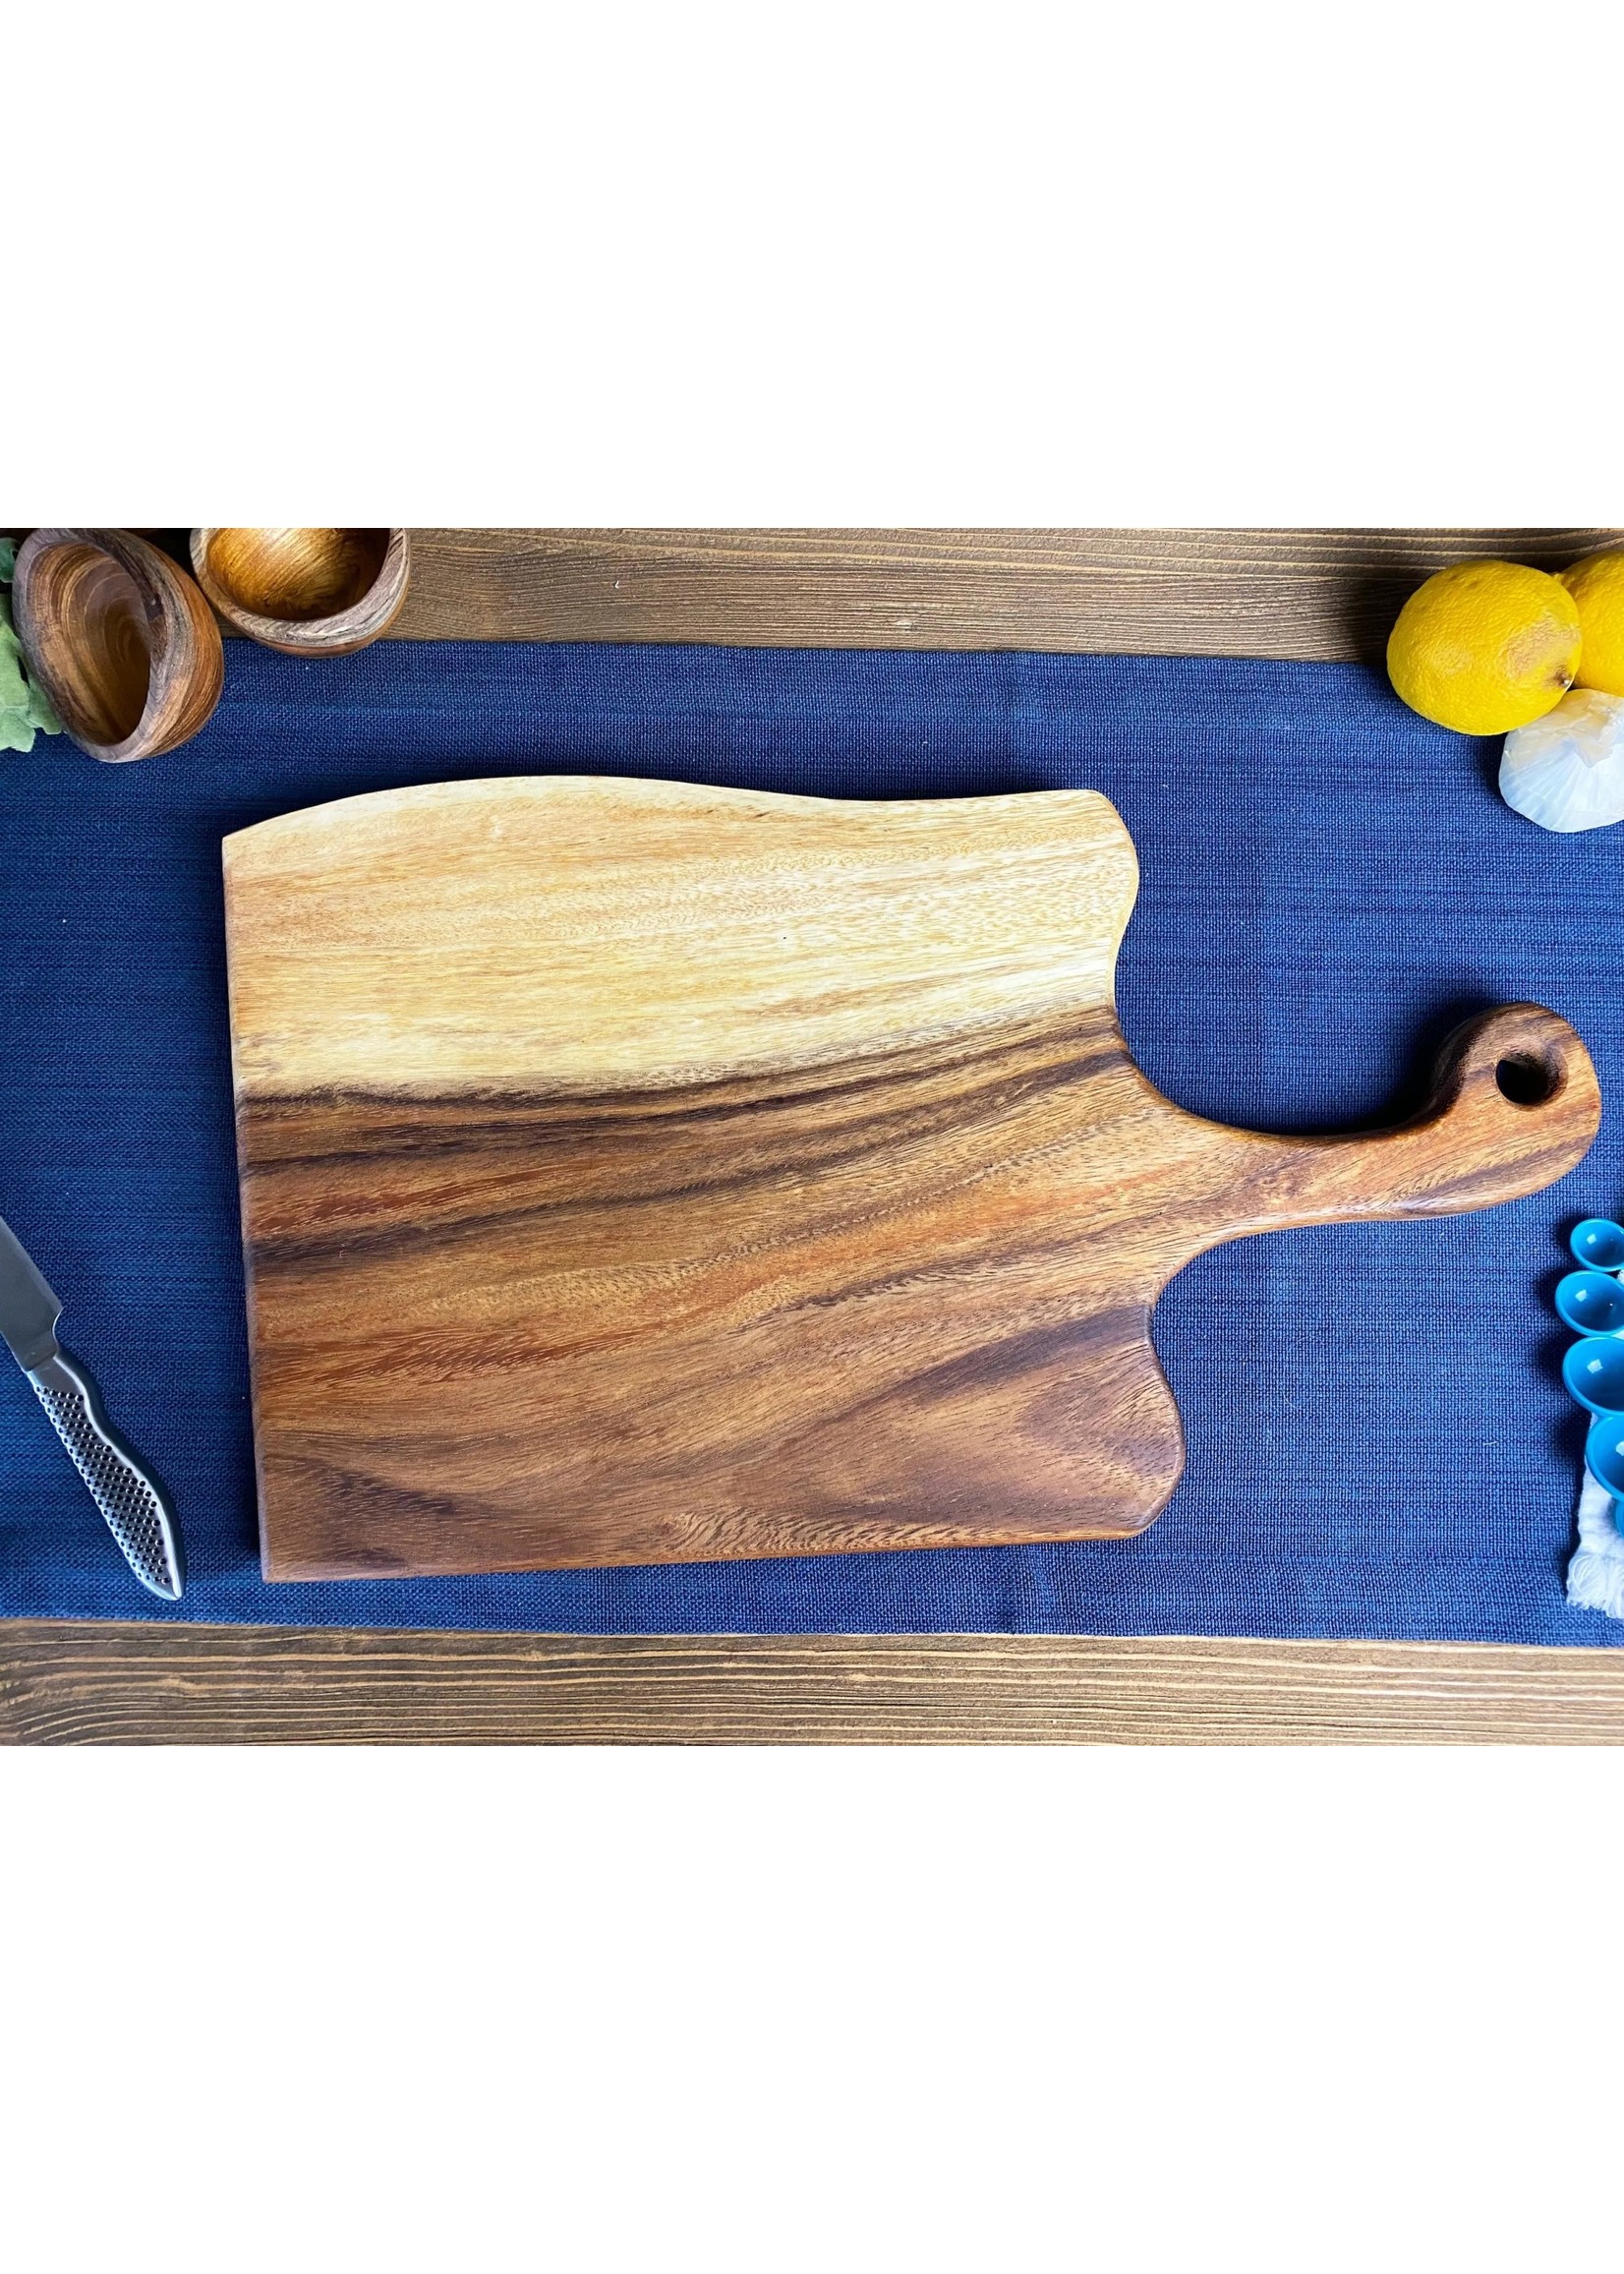 Tuckahoe Hardwoods Charcuterie Board - Live Edge - Cutting Board - with Handle